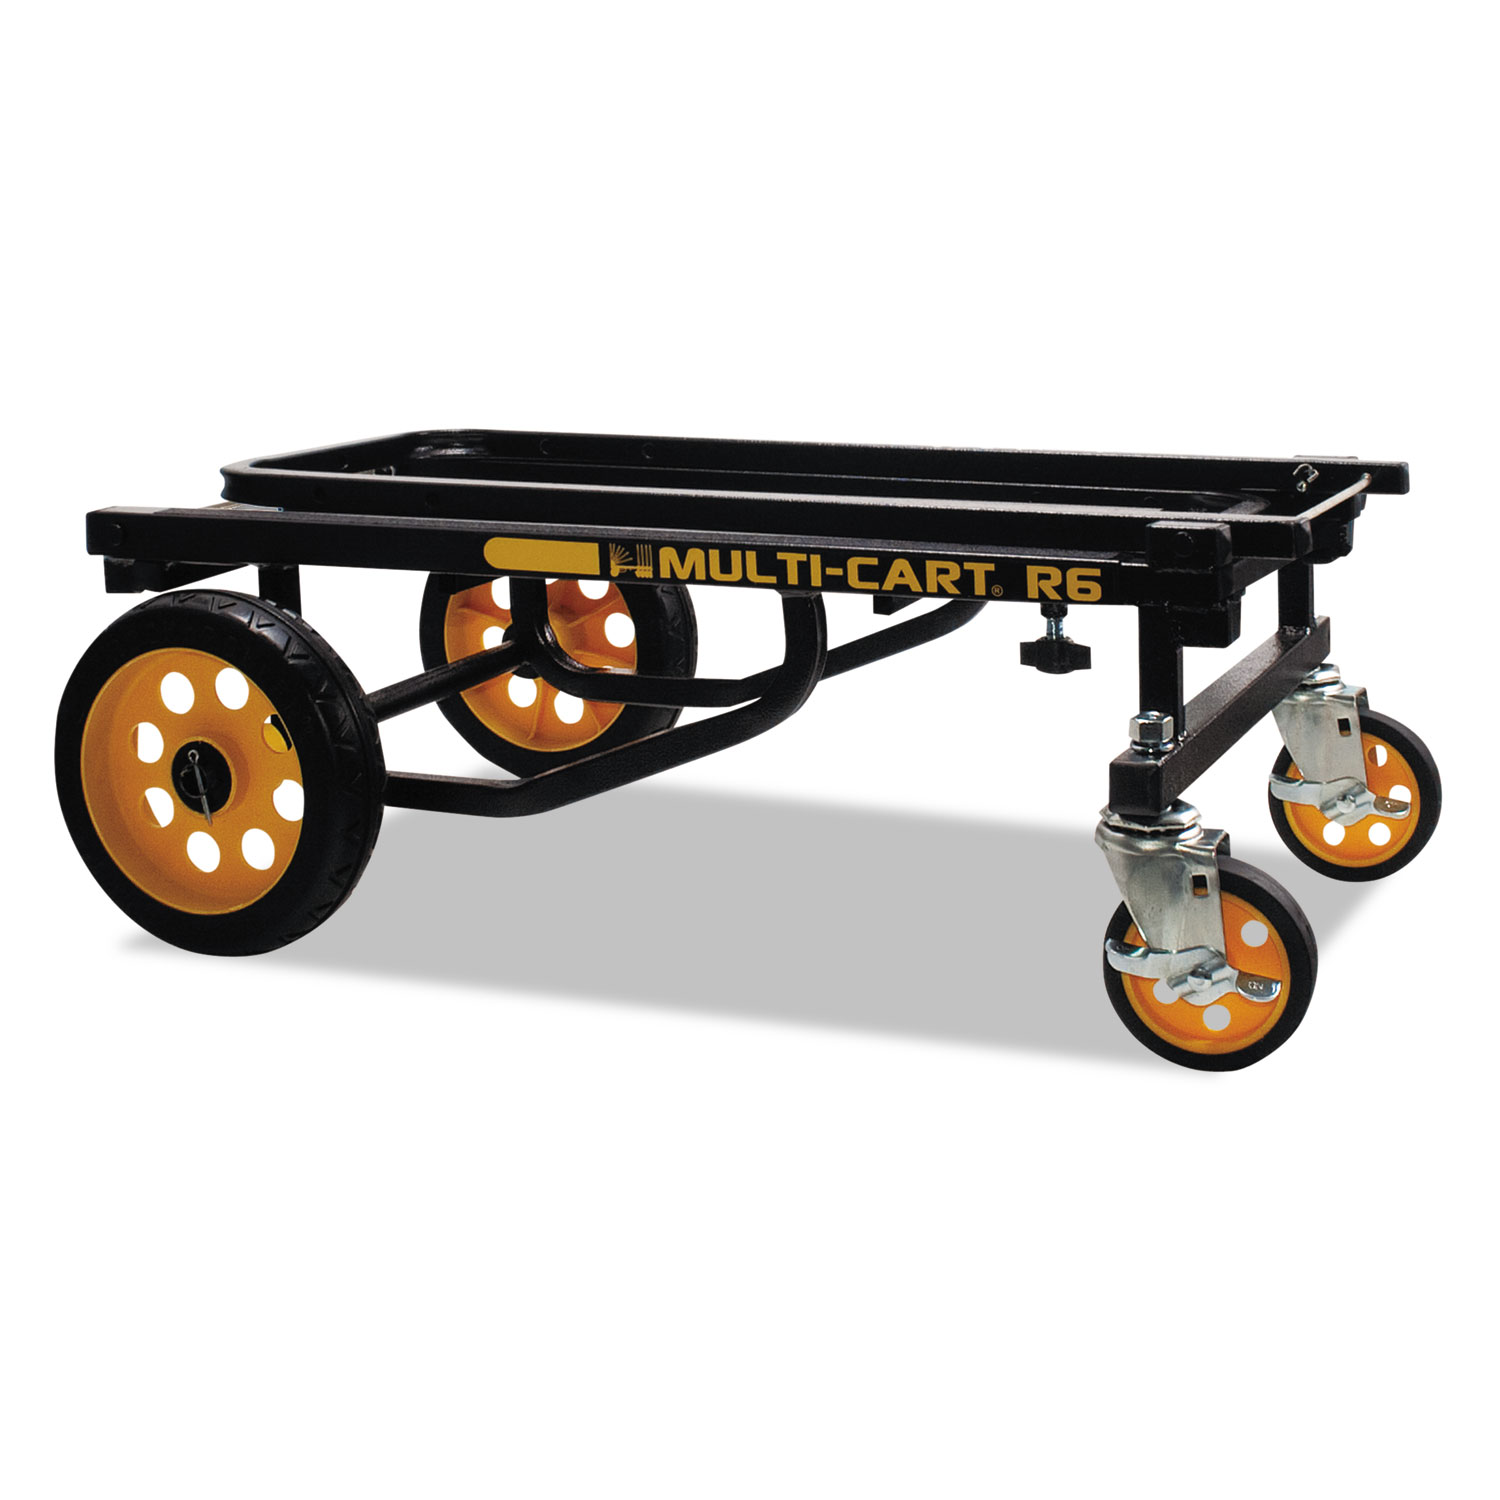 Multi-Cart 8-in-1 Cart, 500lb Capacity, 32 1/2 x 17 1/2 x 42 1/2, Black